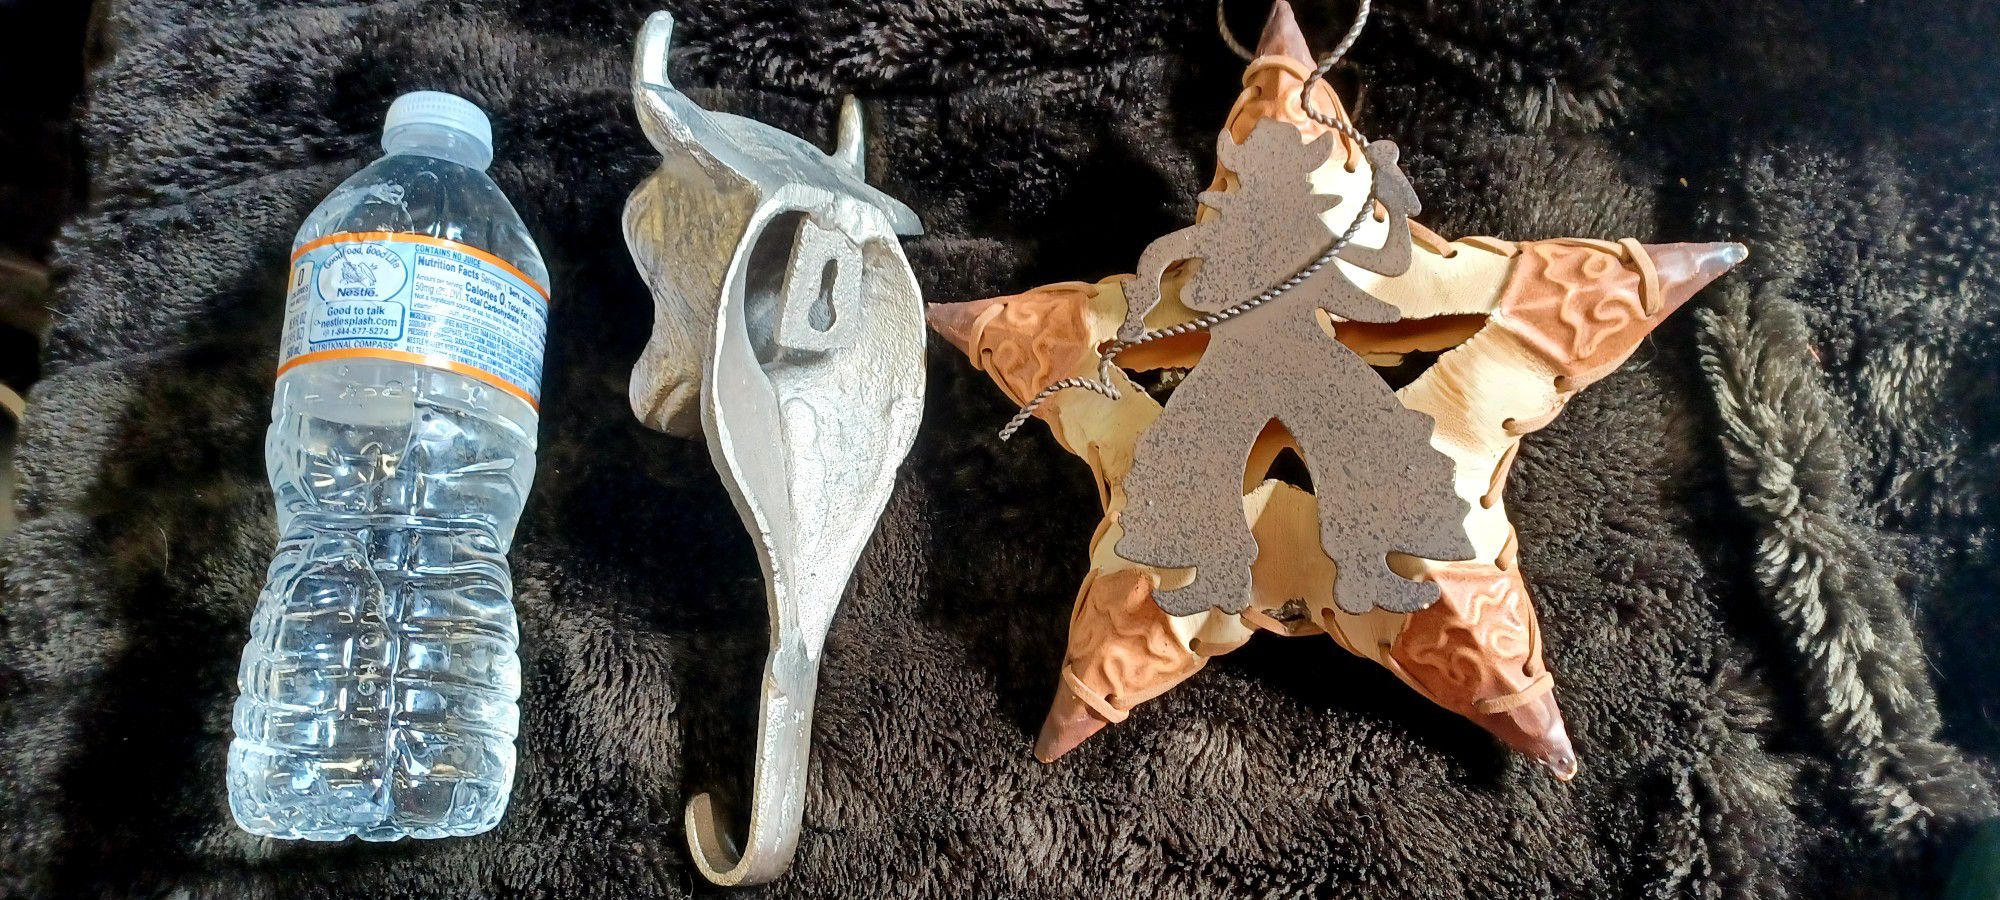 Cowboy Christmas Ornaments $7 Silver Bowl Wall Hanger For A Coat Or Hat $10 Horn Mug $35